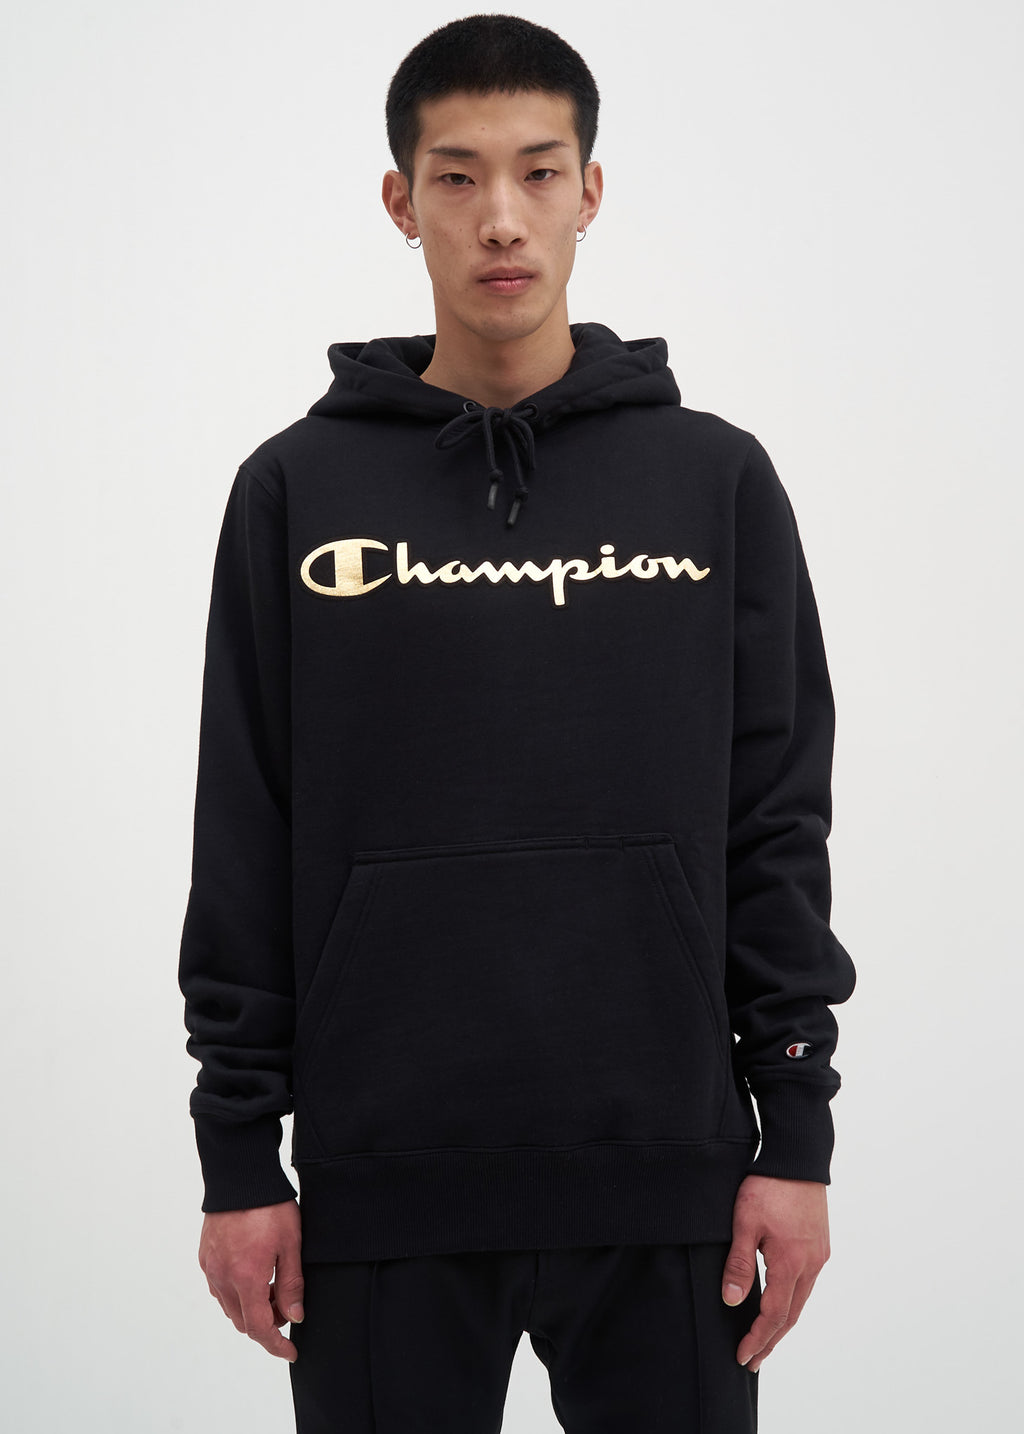 black and gold champion sweatshirt